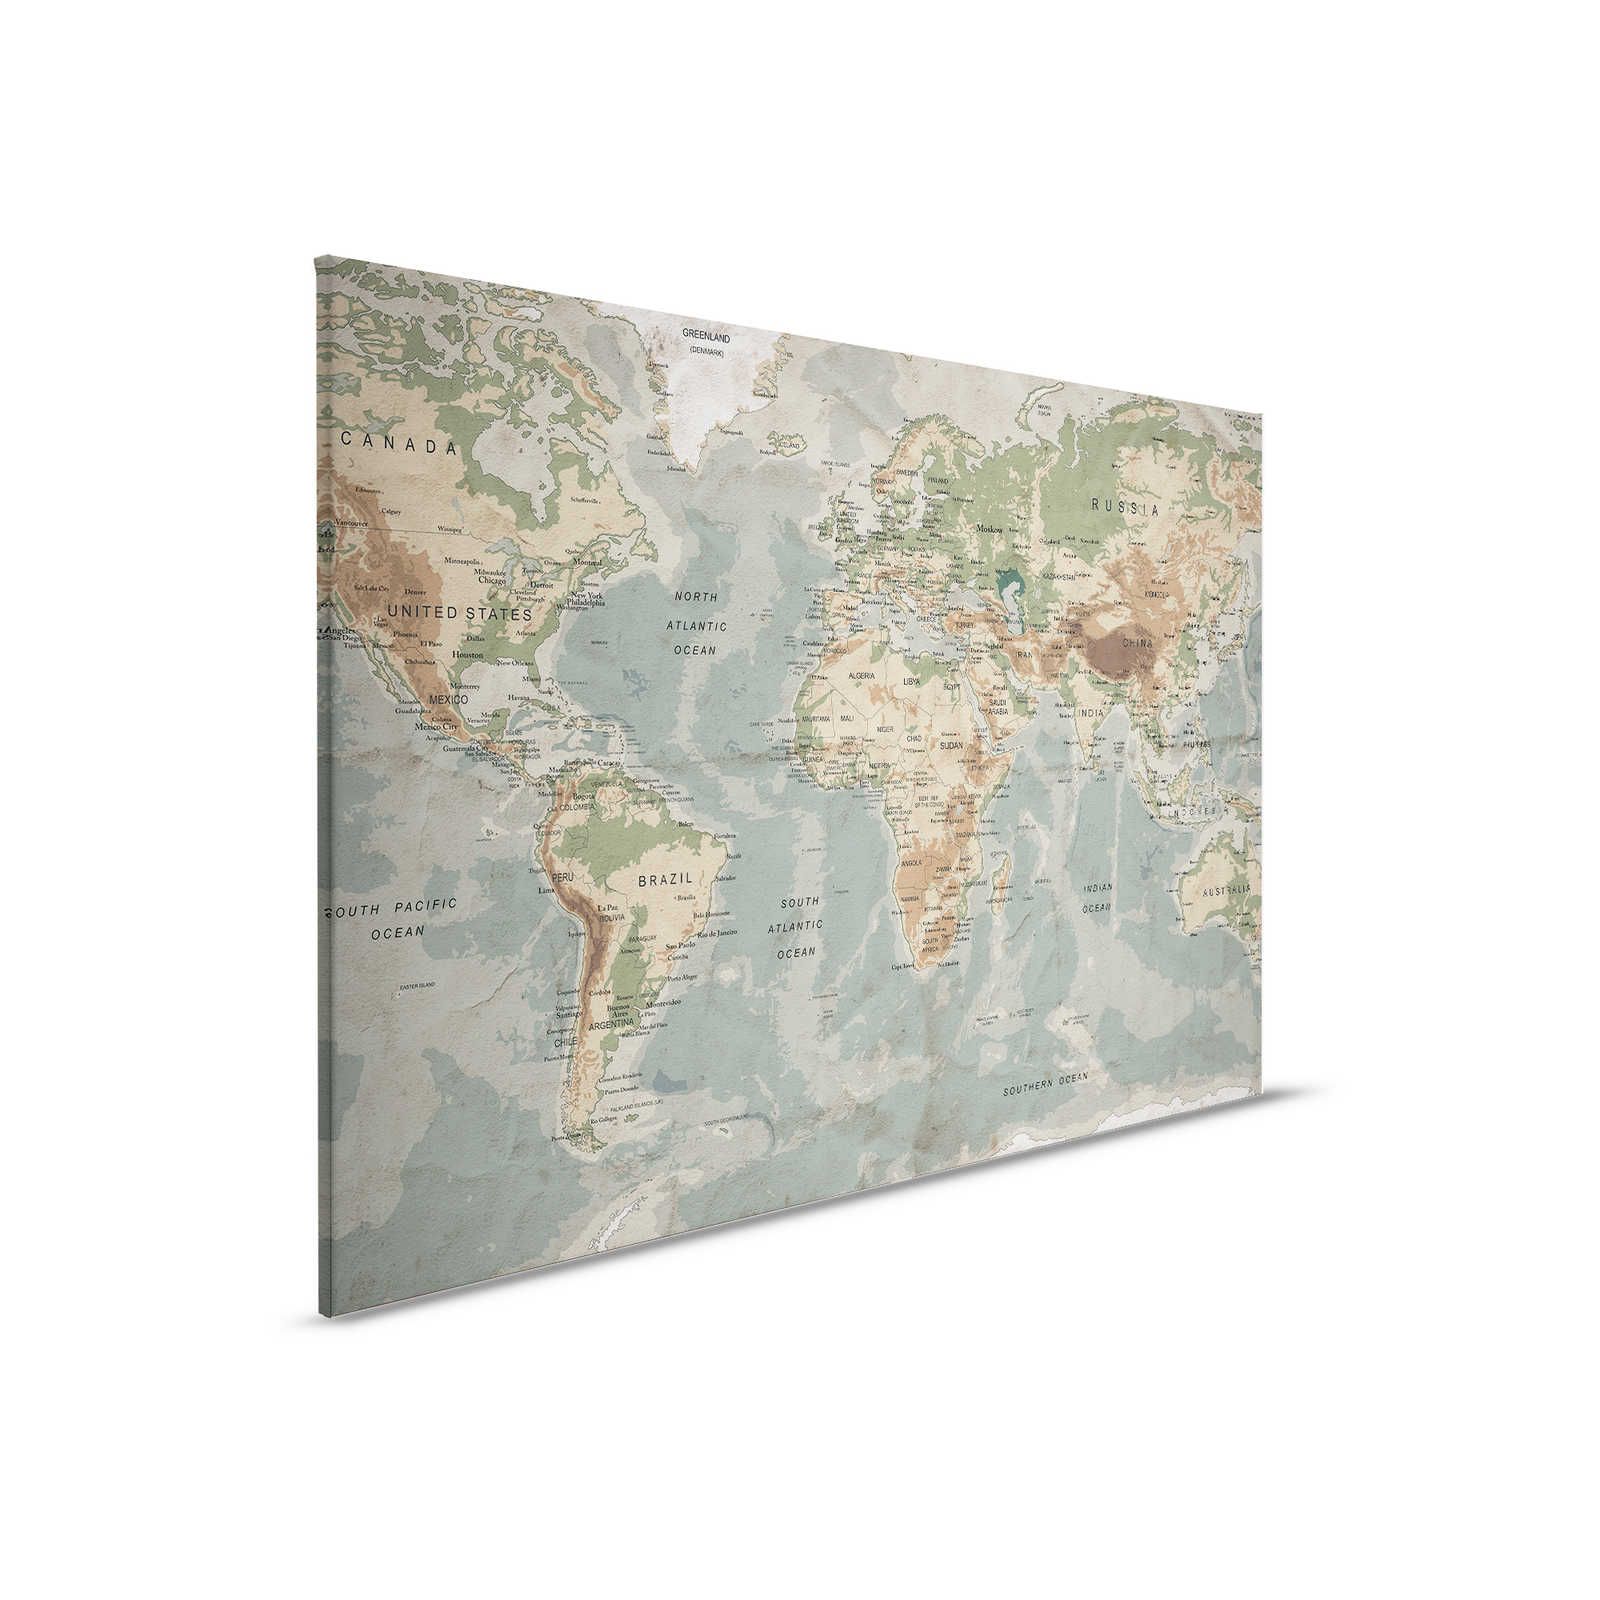 Retro Canvas Painting World Map with Typographic Design - 0.90 m x 0.60 m
